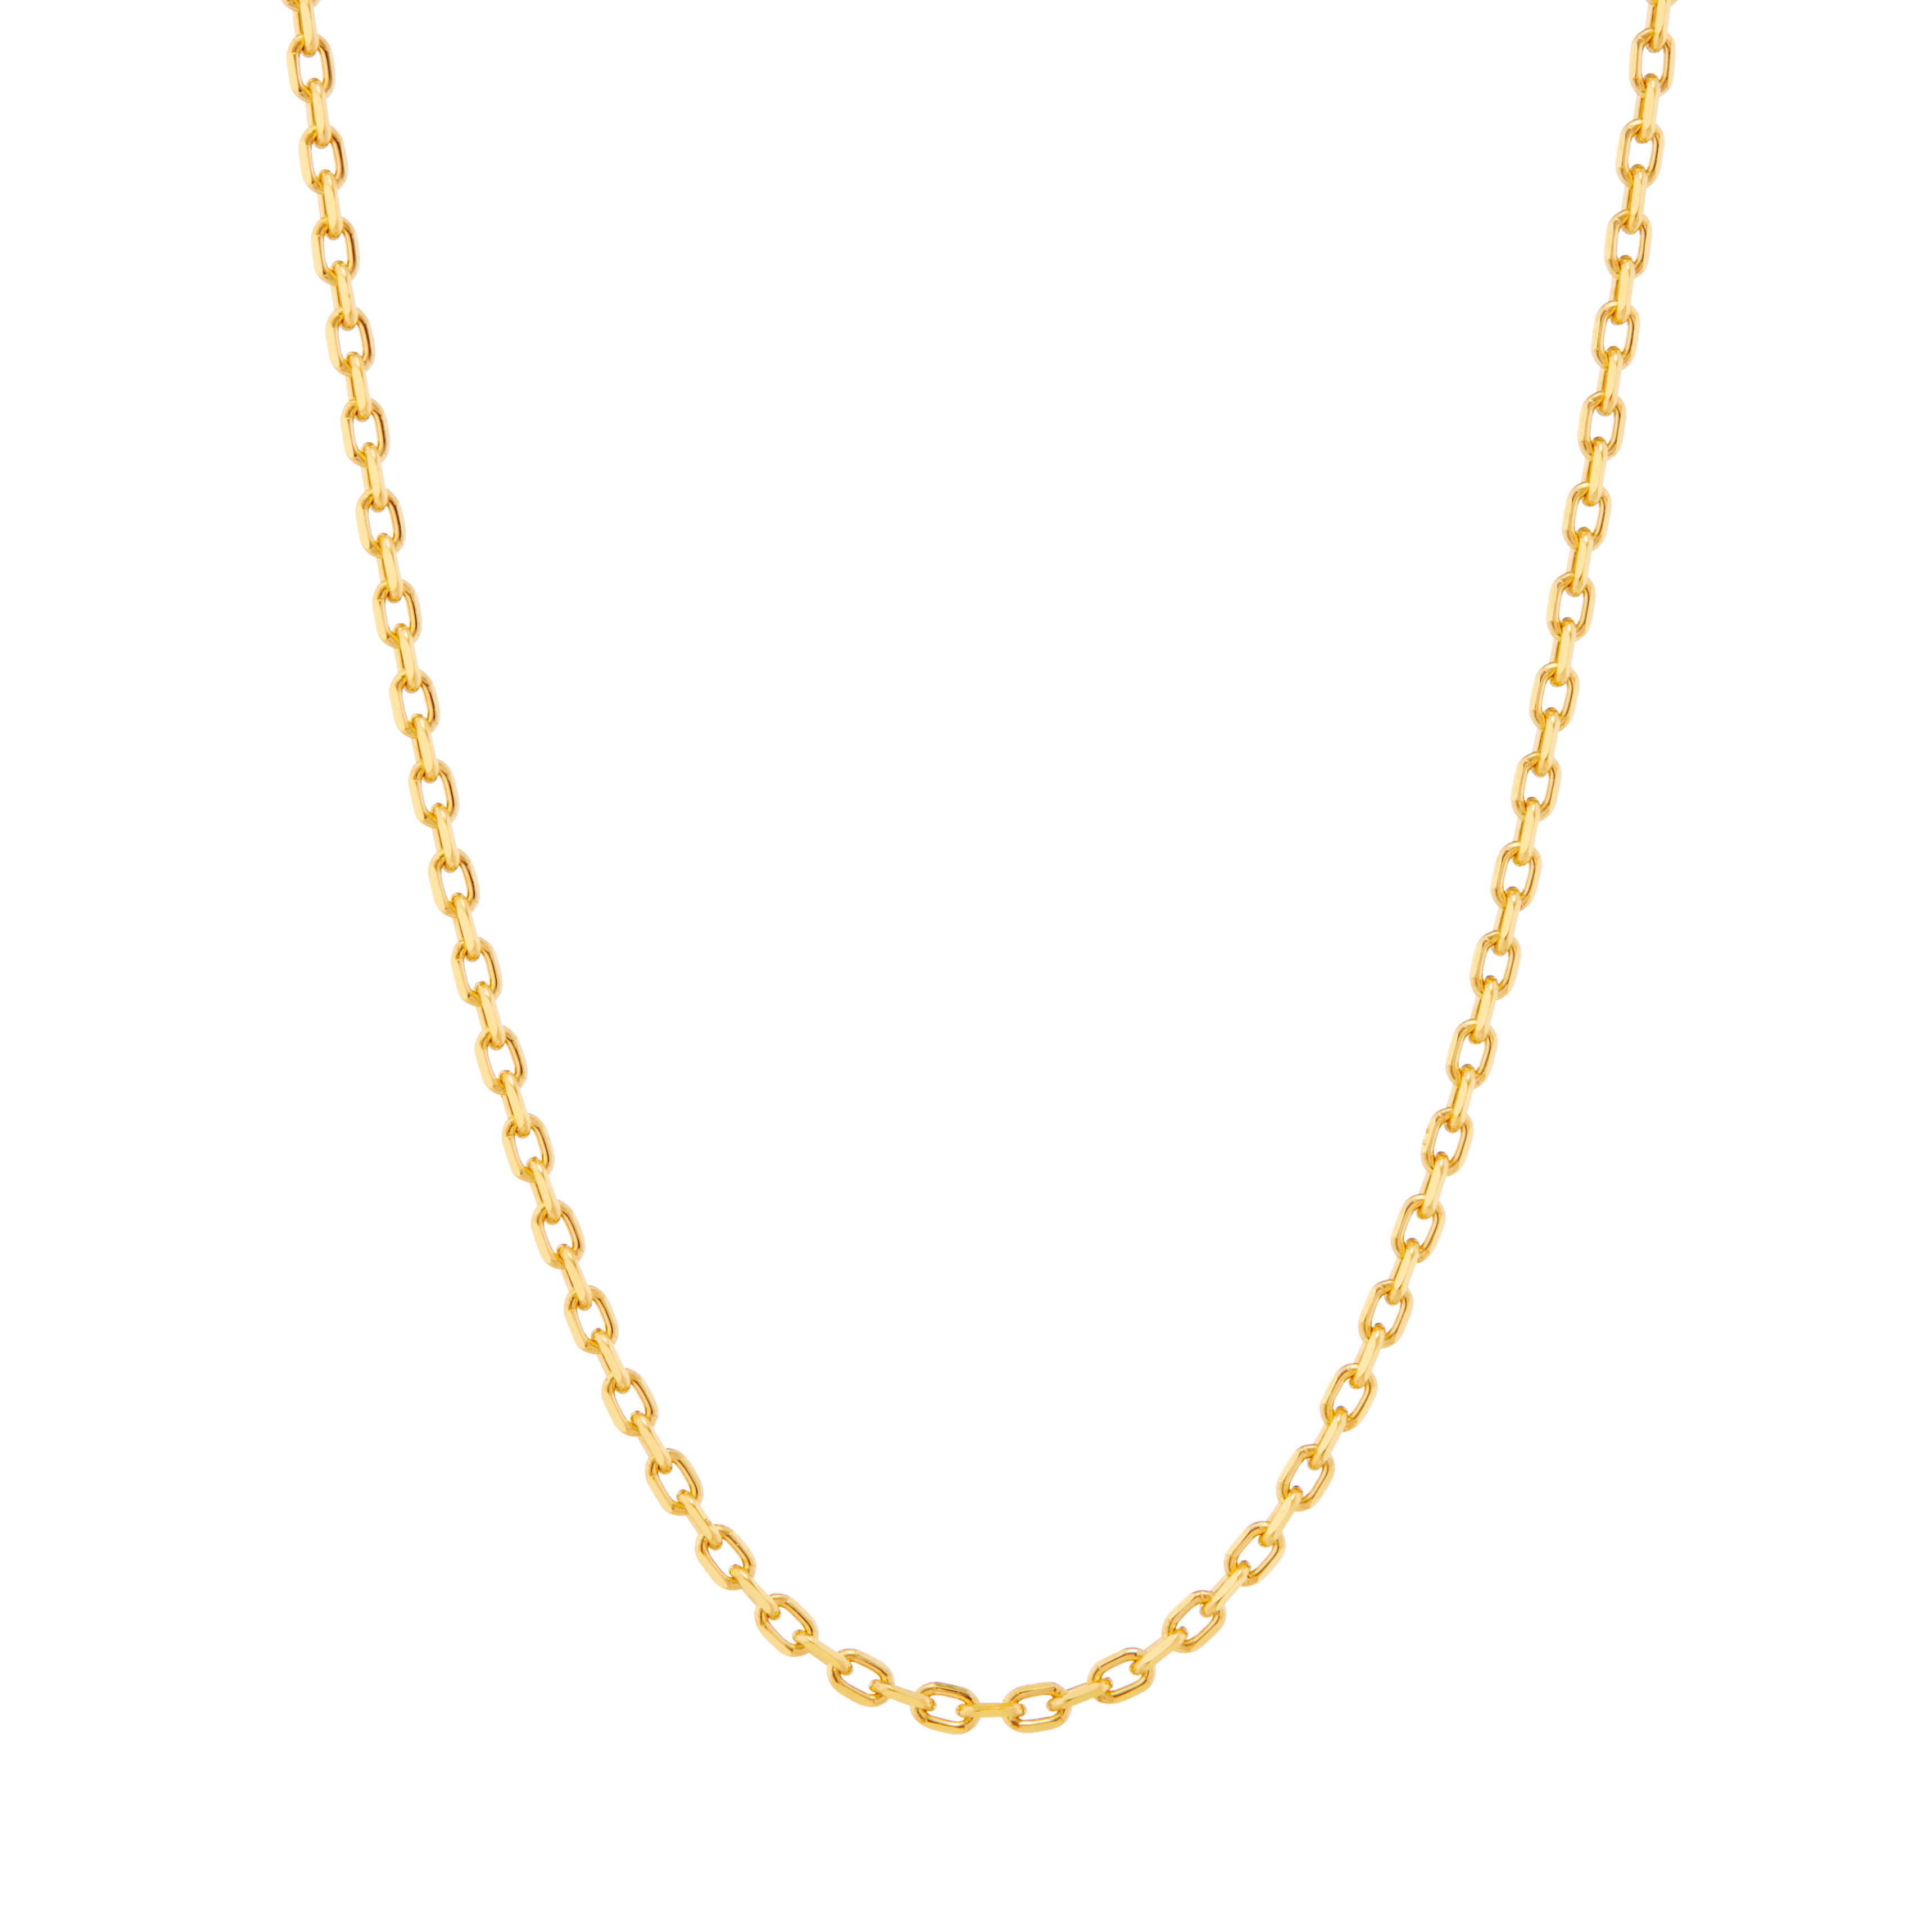 Shop Gold Necklace Chains Diamond Cut Cable Chain Necklace